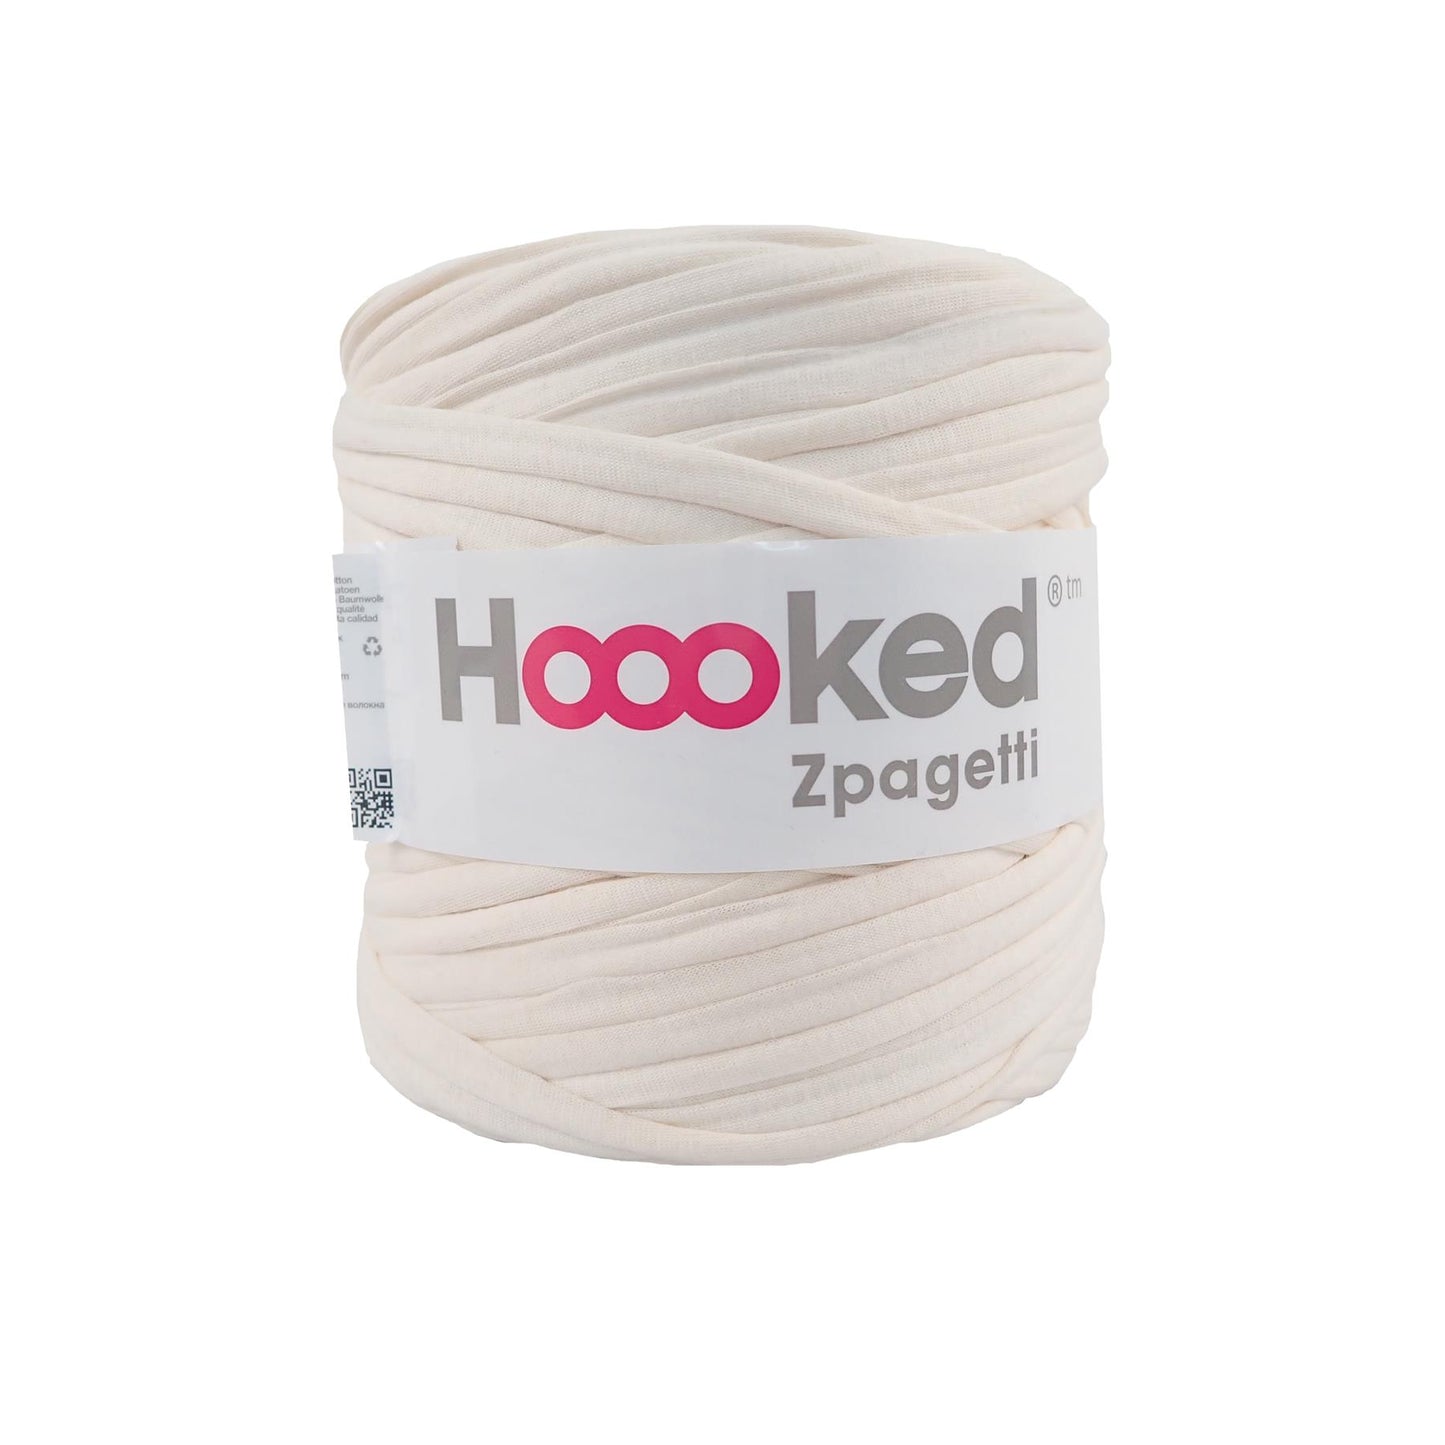 Hoooked Zpagetti Light Beige Cotton T-Shirt Yarn - 120M 700g